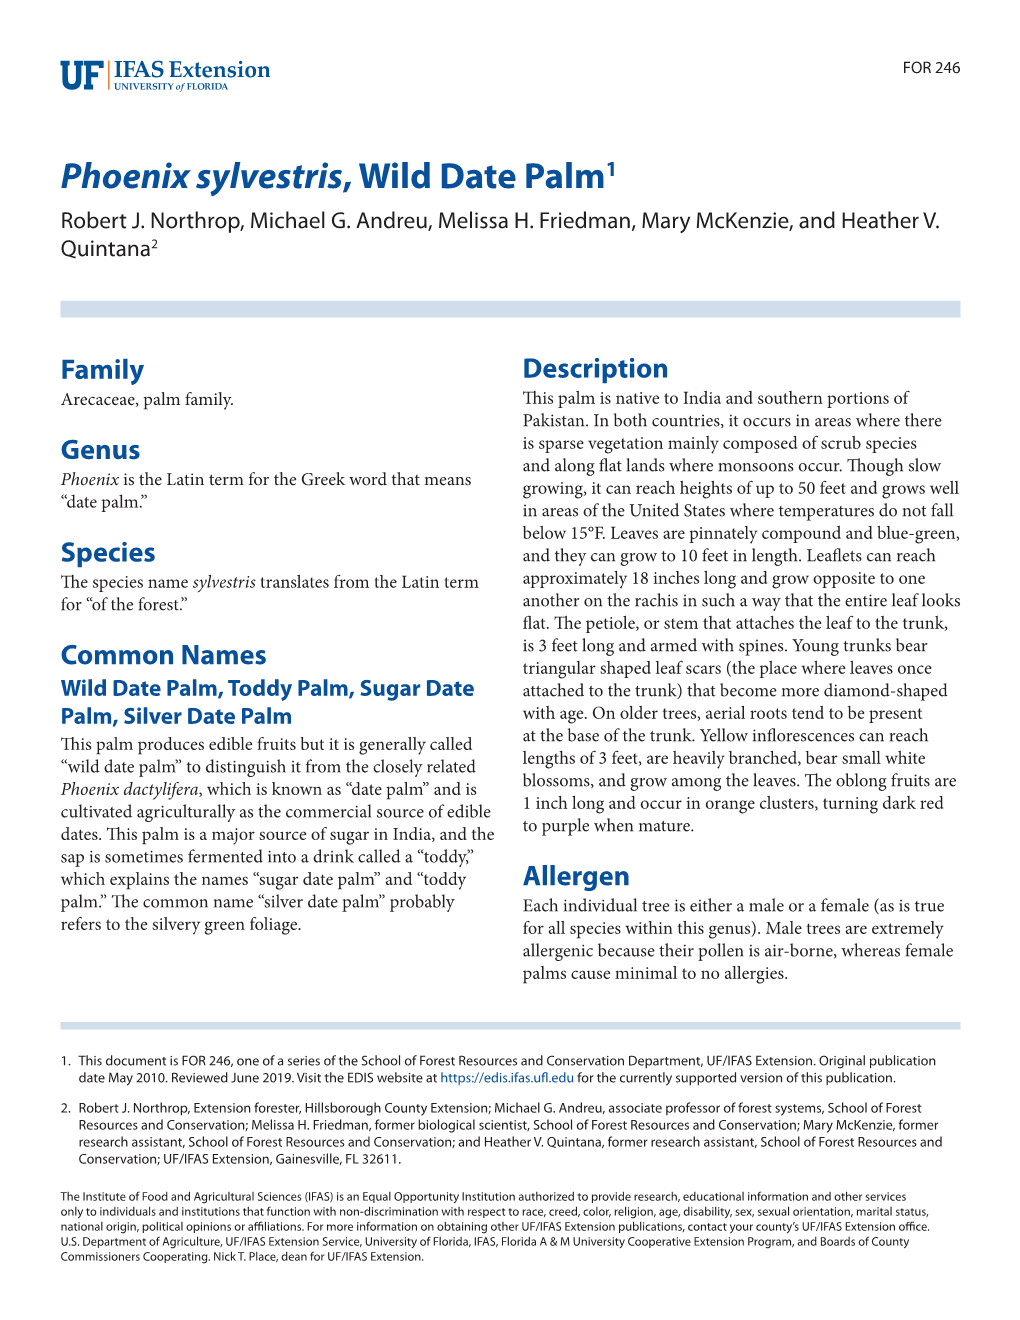 Phoenix Sylvestris, Wild Date Palm1 Robert J